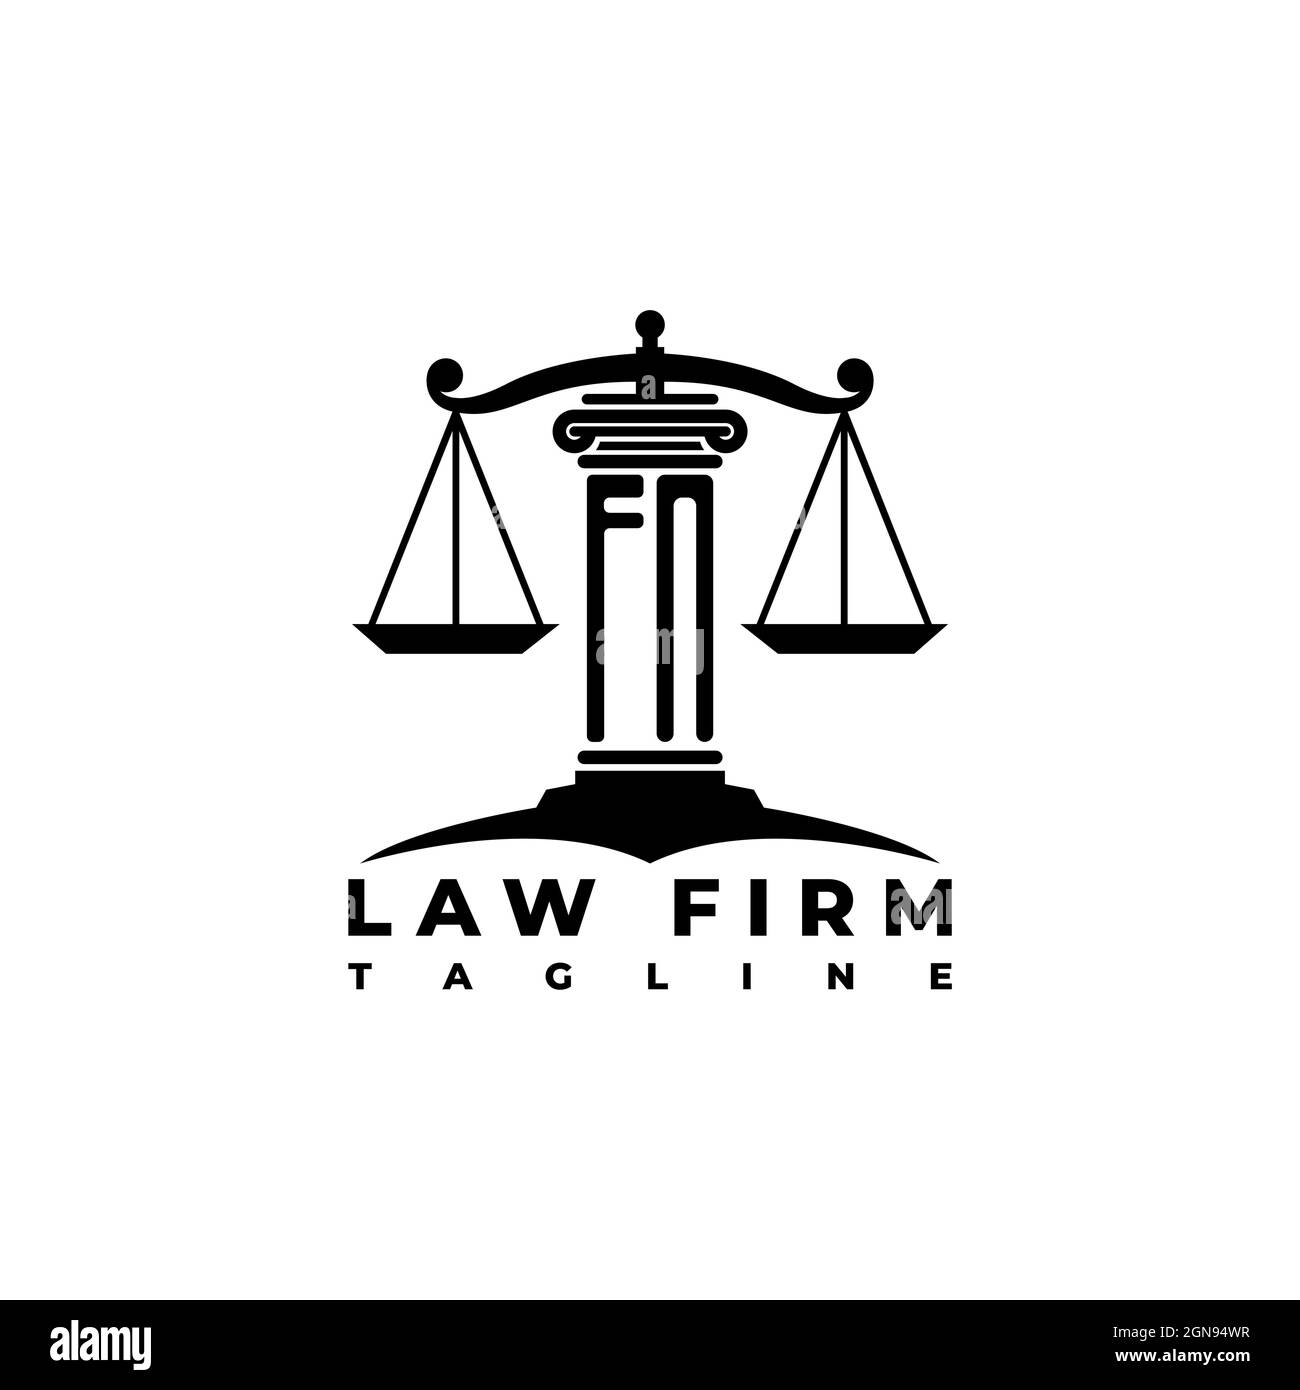 FN Monogram Logo Letter Pillars Geometric Shape Style Vector, Law Firm Company Illustrazione Vettoriale